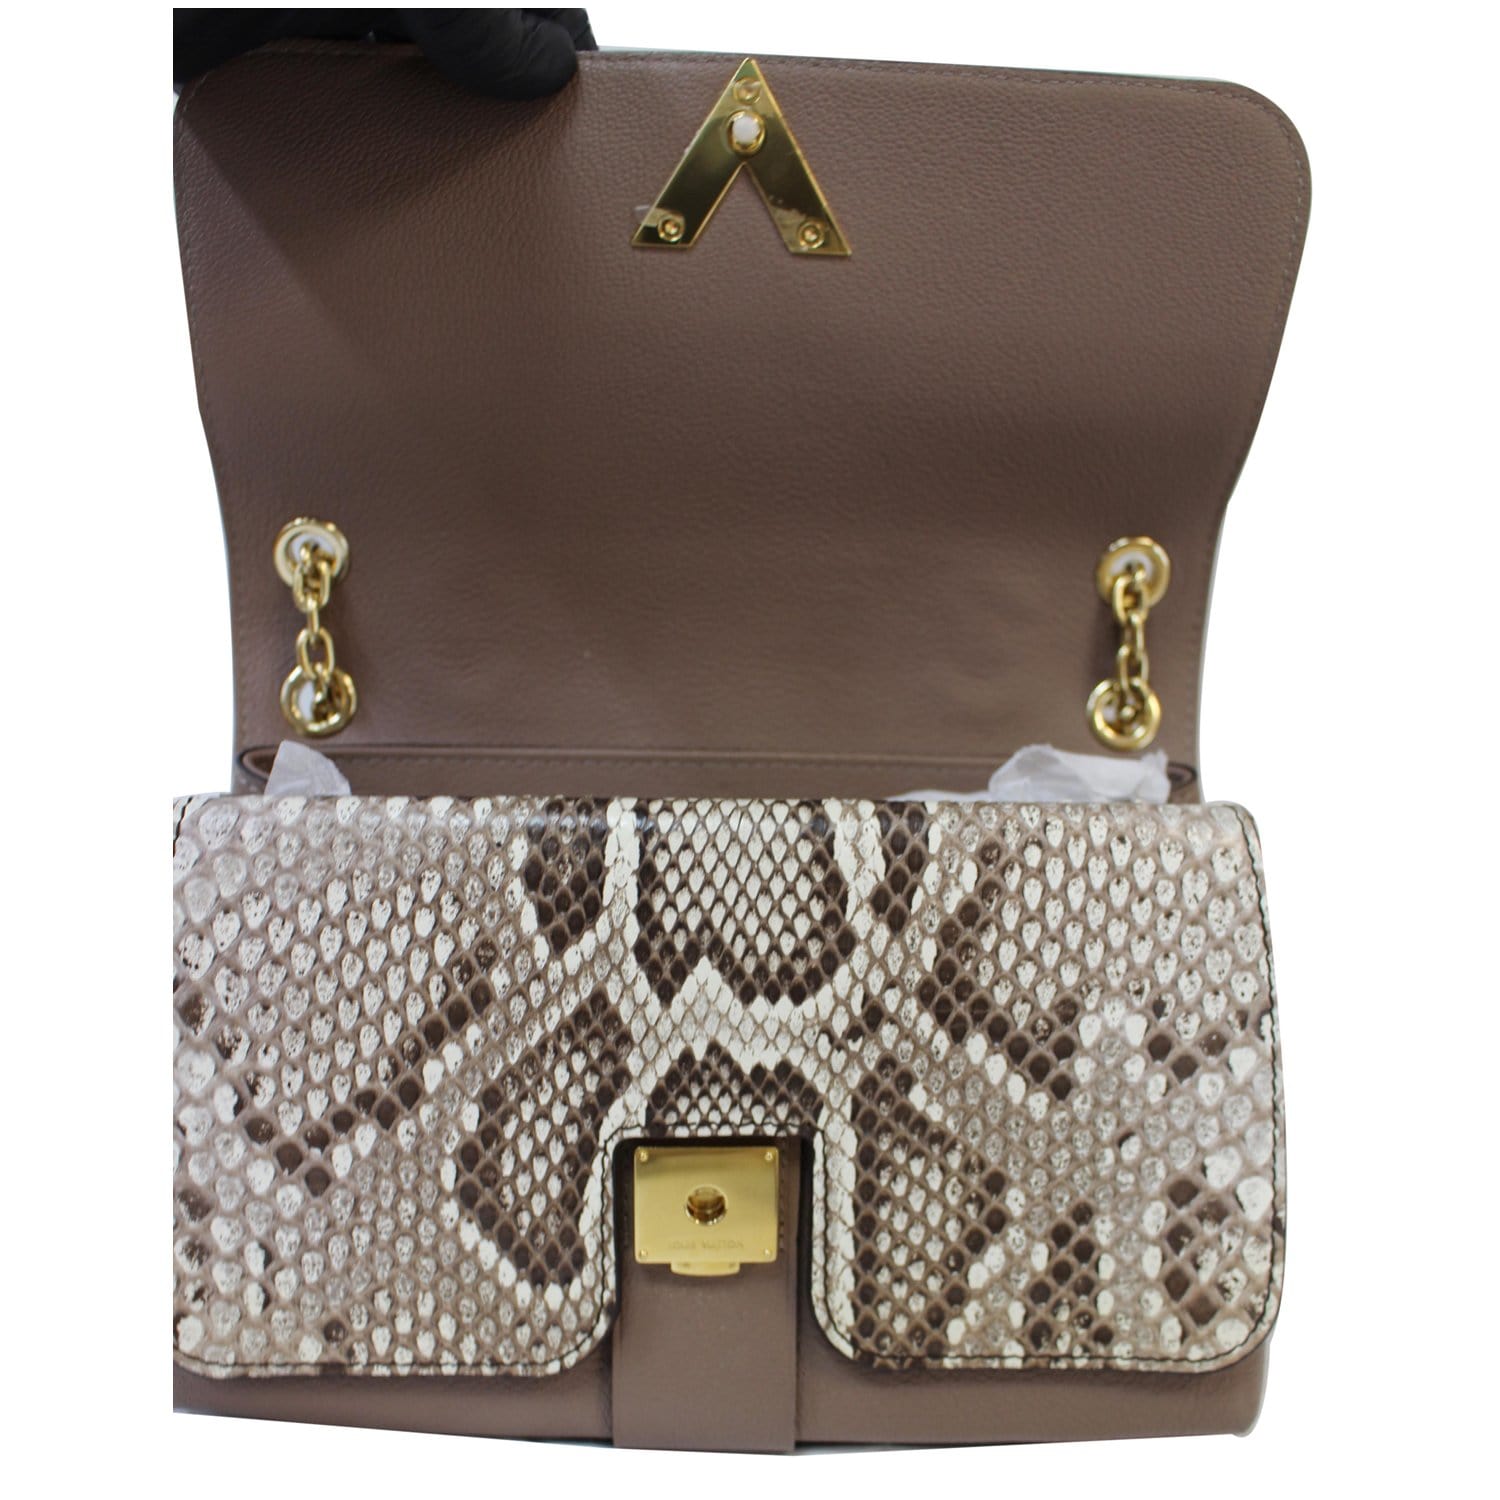 louis vuitton purse with gold chain strap